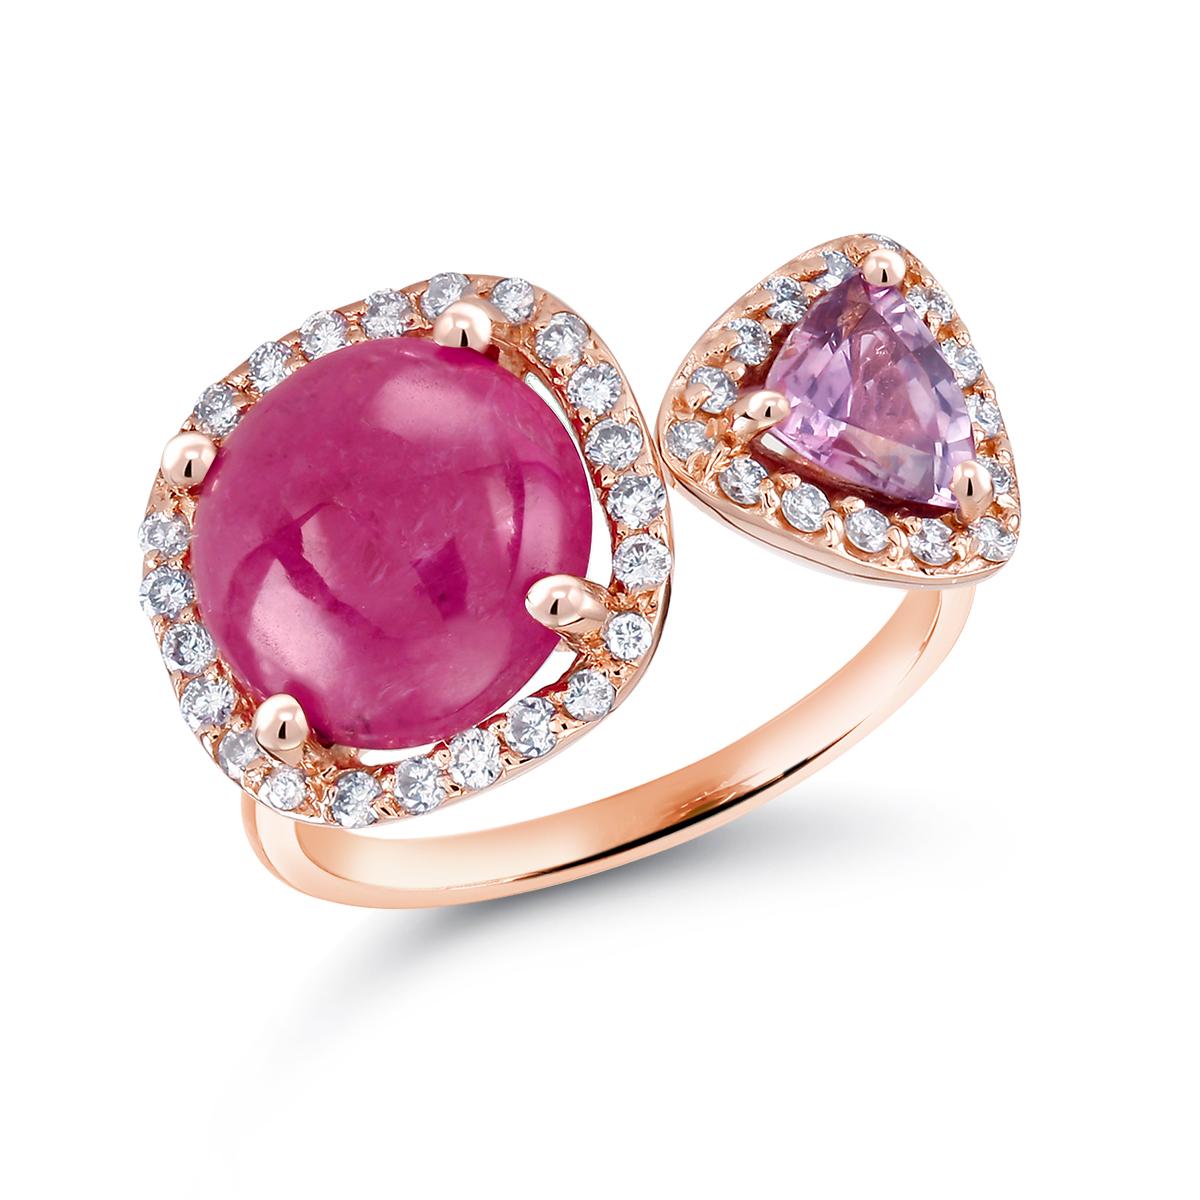  Burma Cabochon Ruby Diamond Pink Sapphire Open Shank Ring  Weighing 5.92 Carats 1